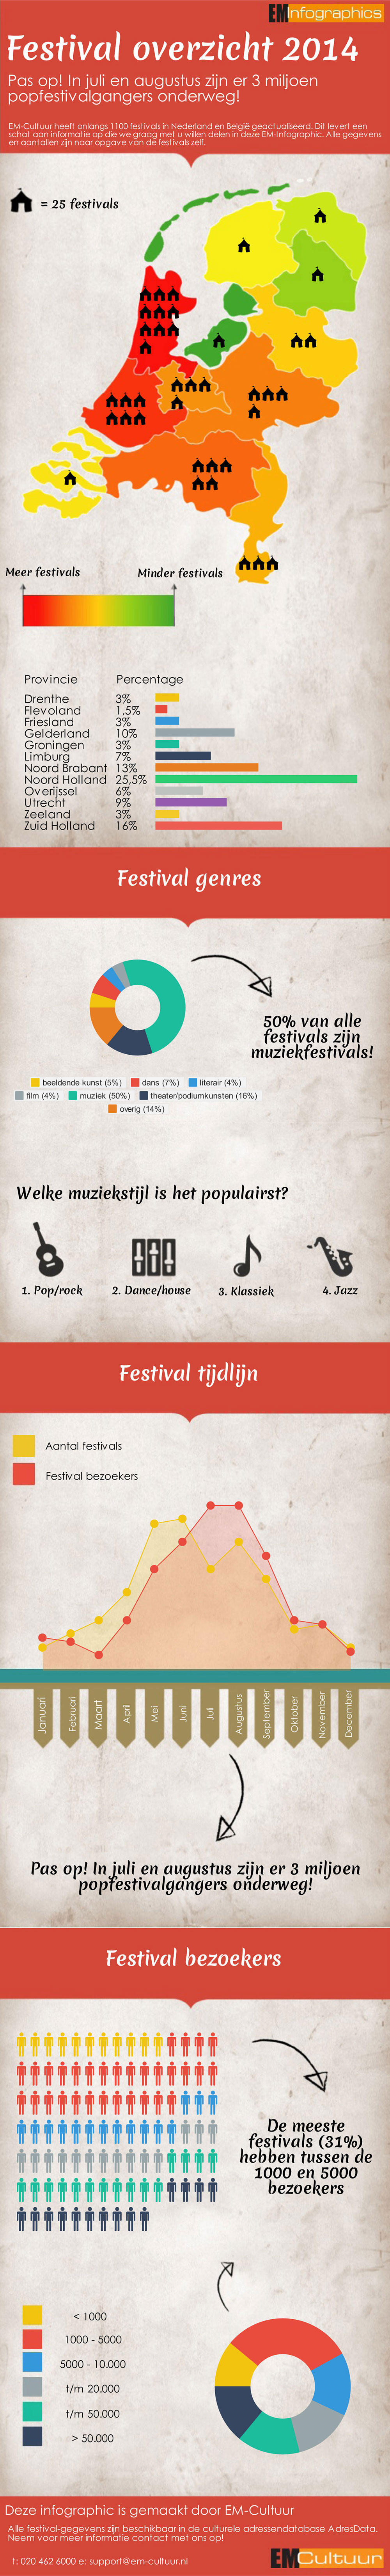 Infographic Festival 2014 